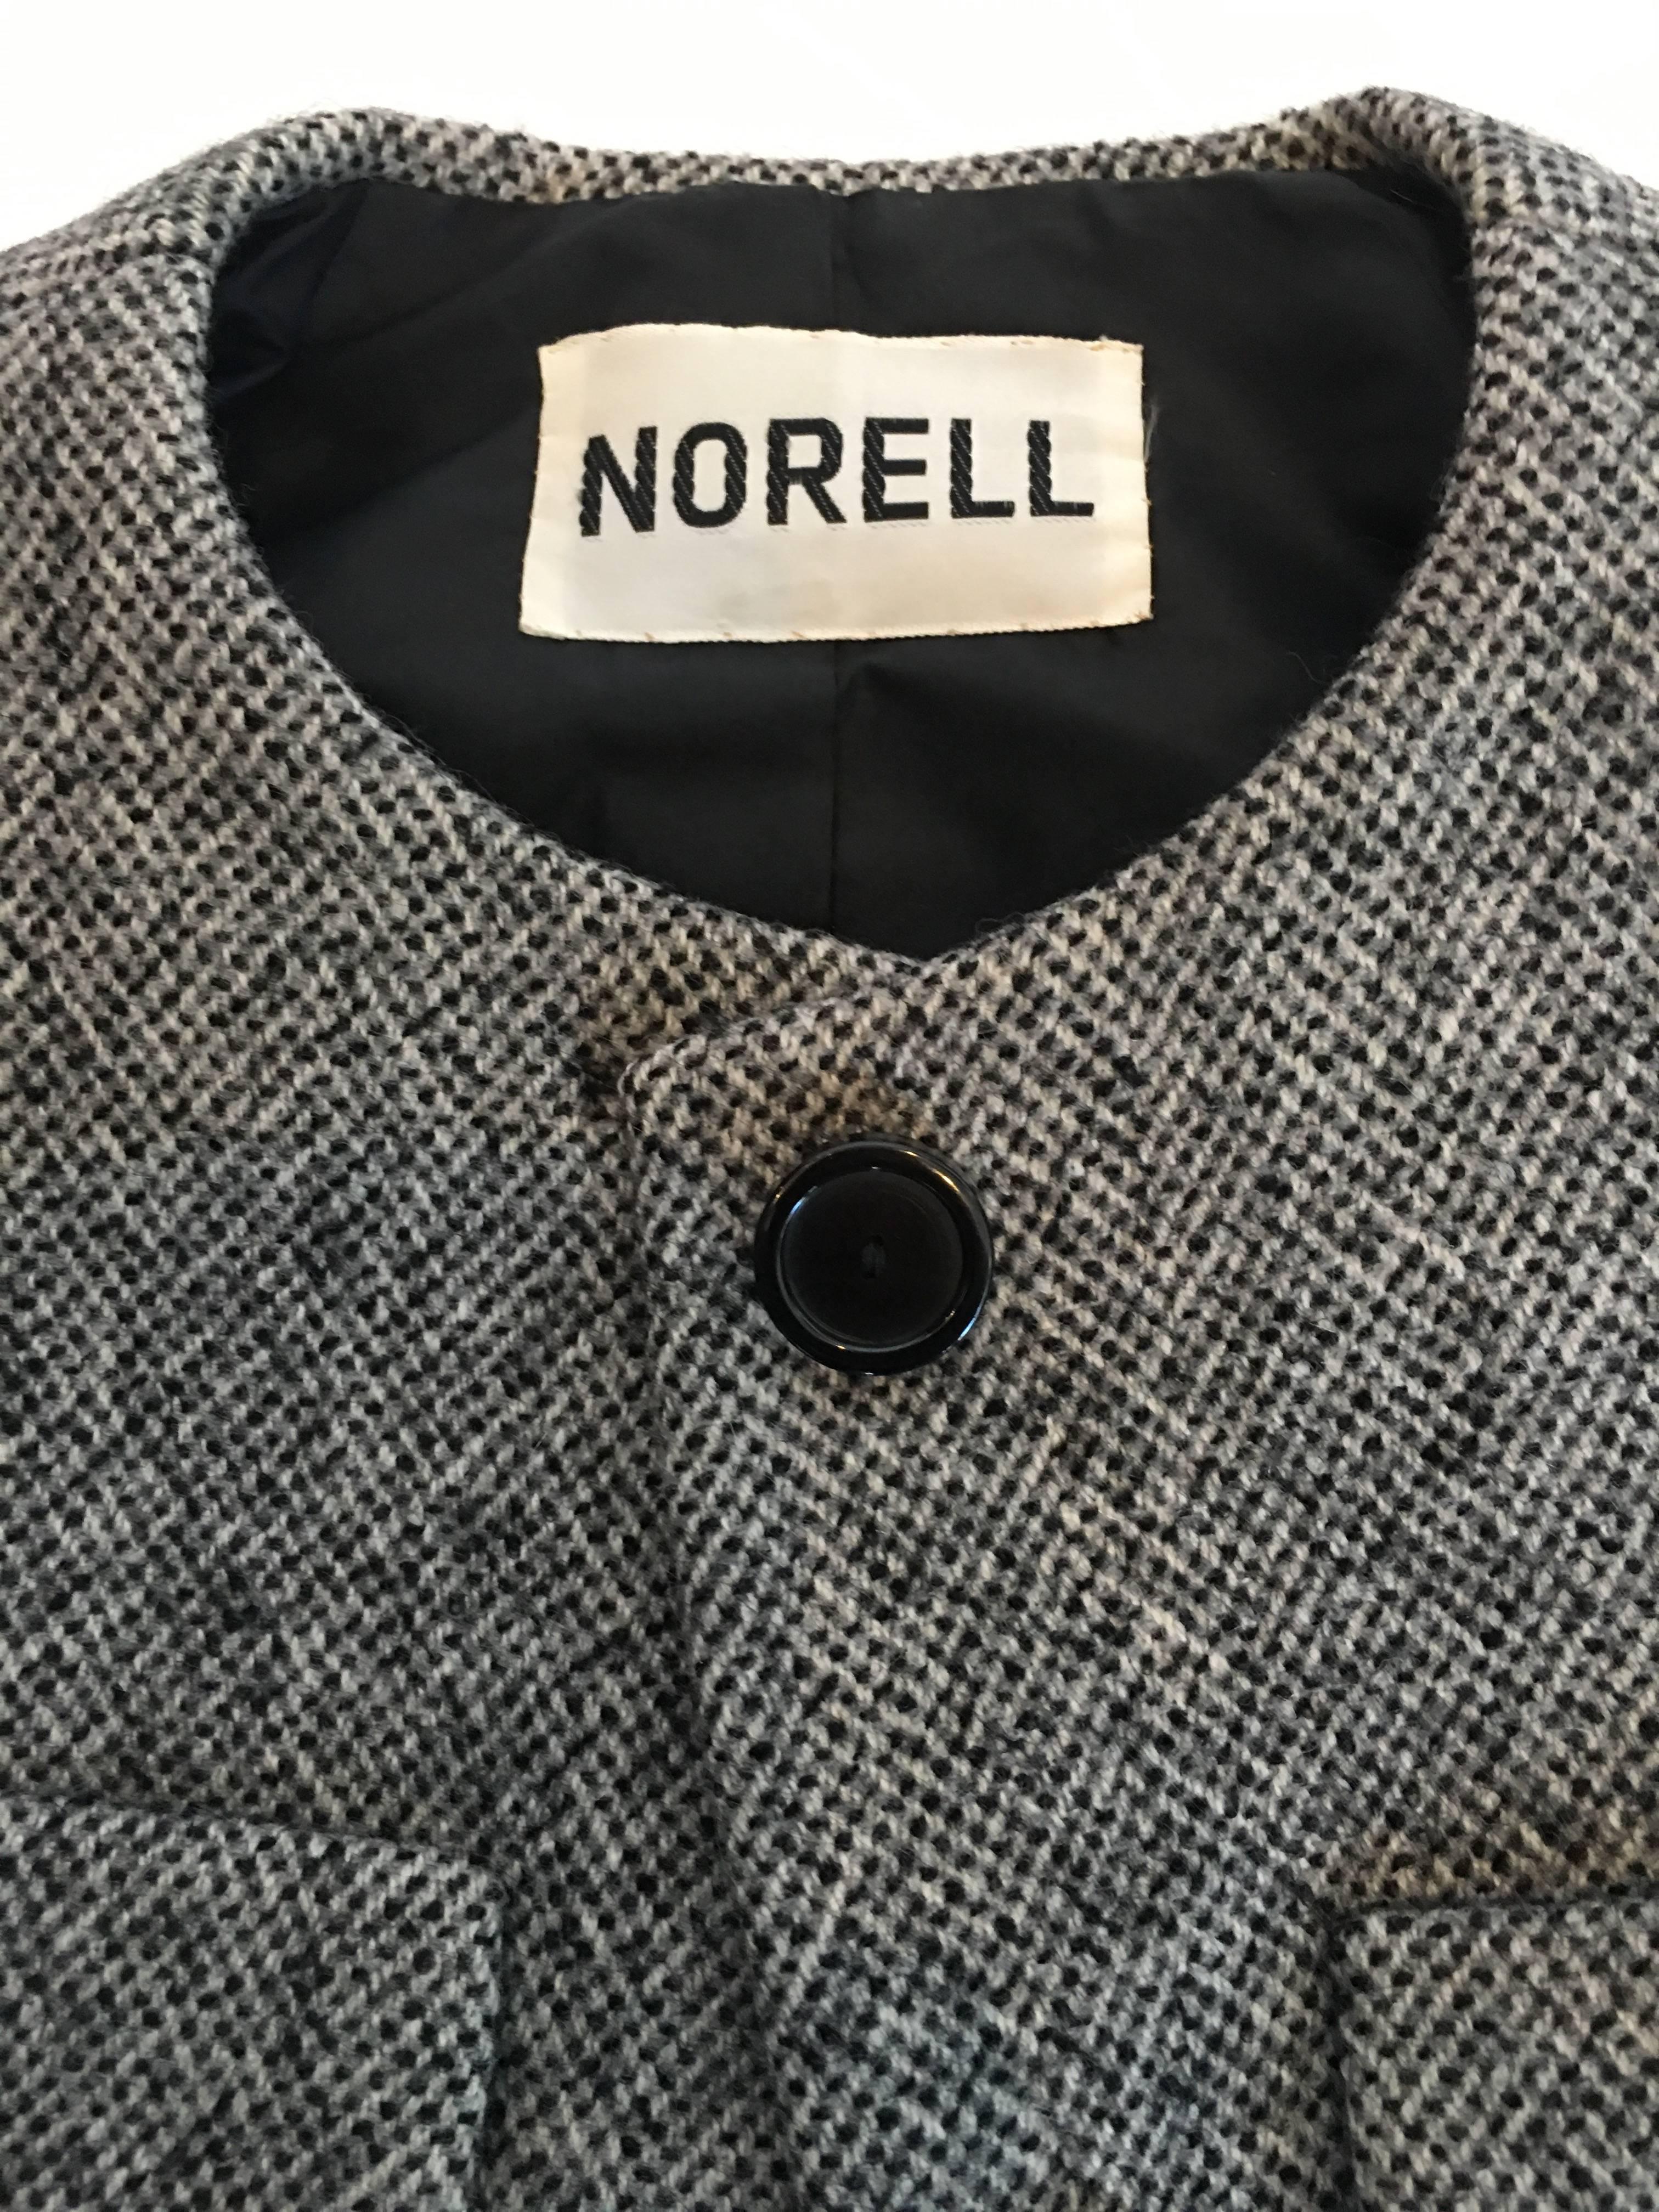 Women's or Men's Norell Vintage 1960's Tweed Skirt Suit For Sale